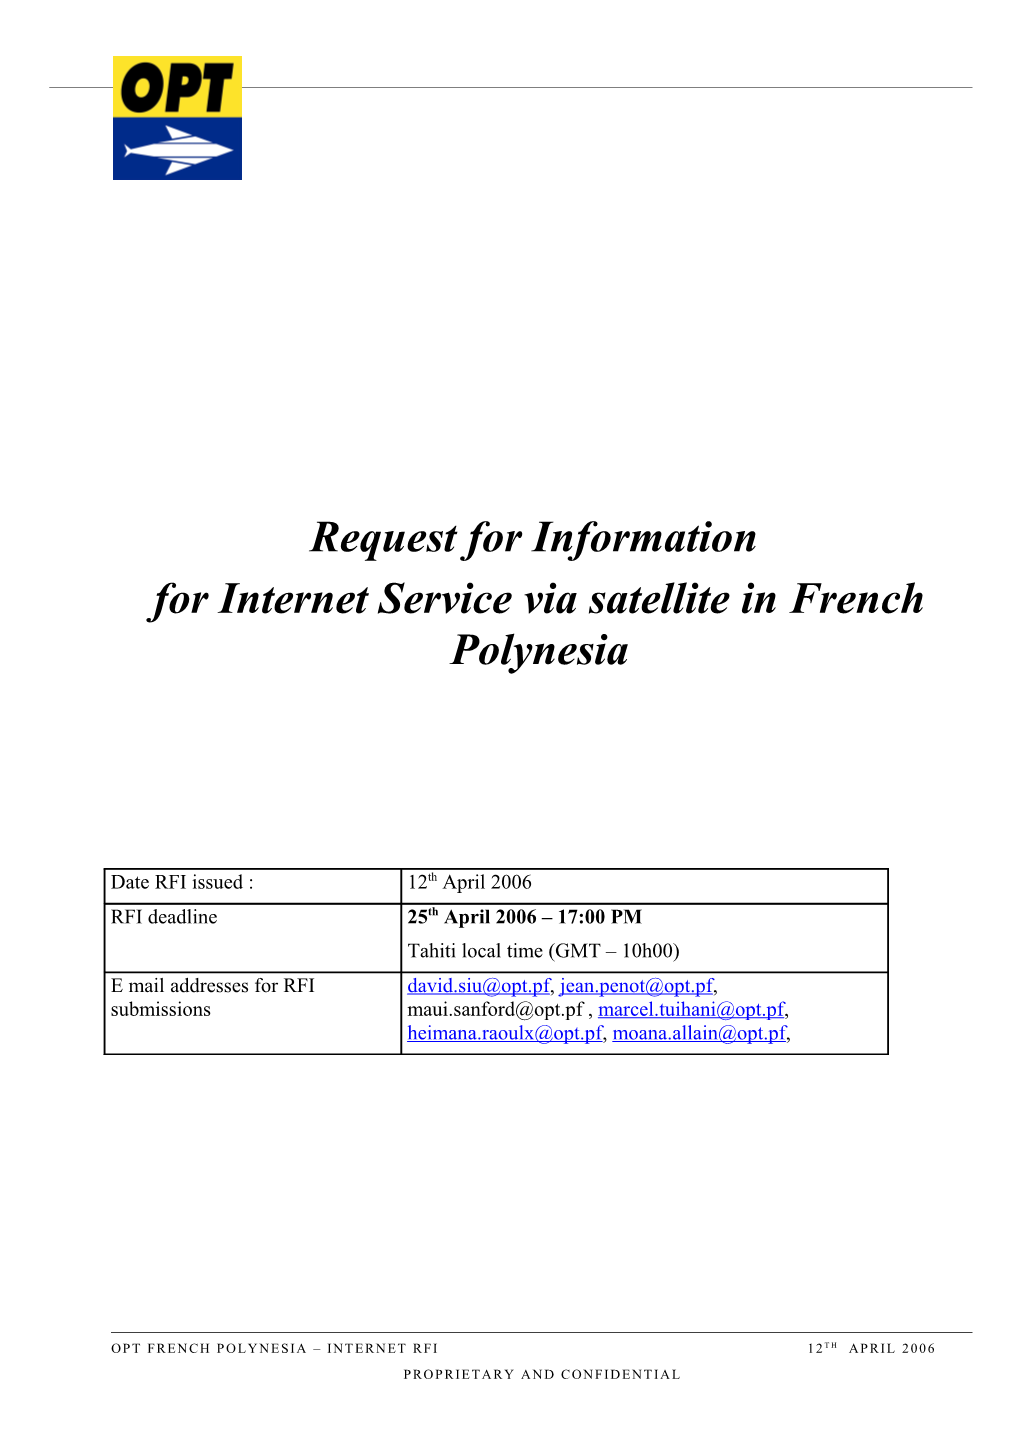 For Internet Service Via Satellite in French Polynesia